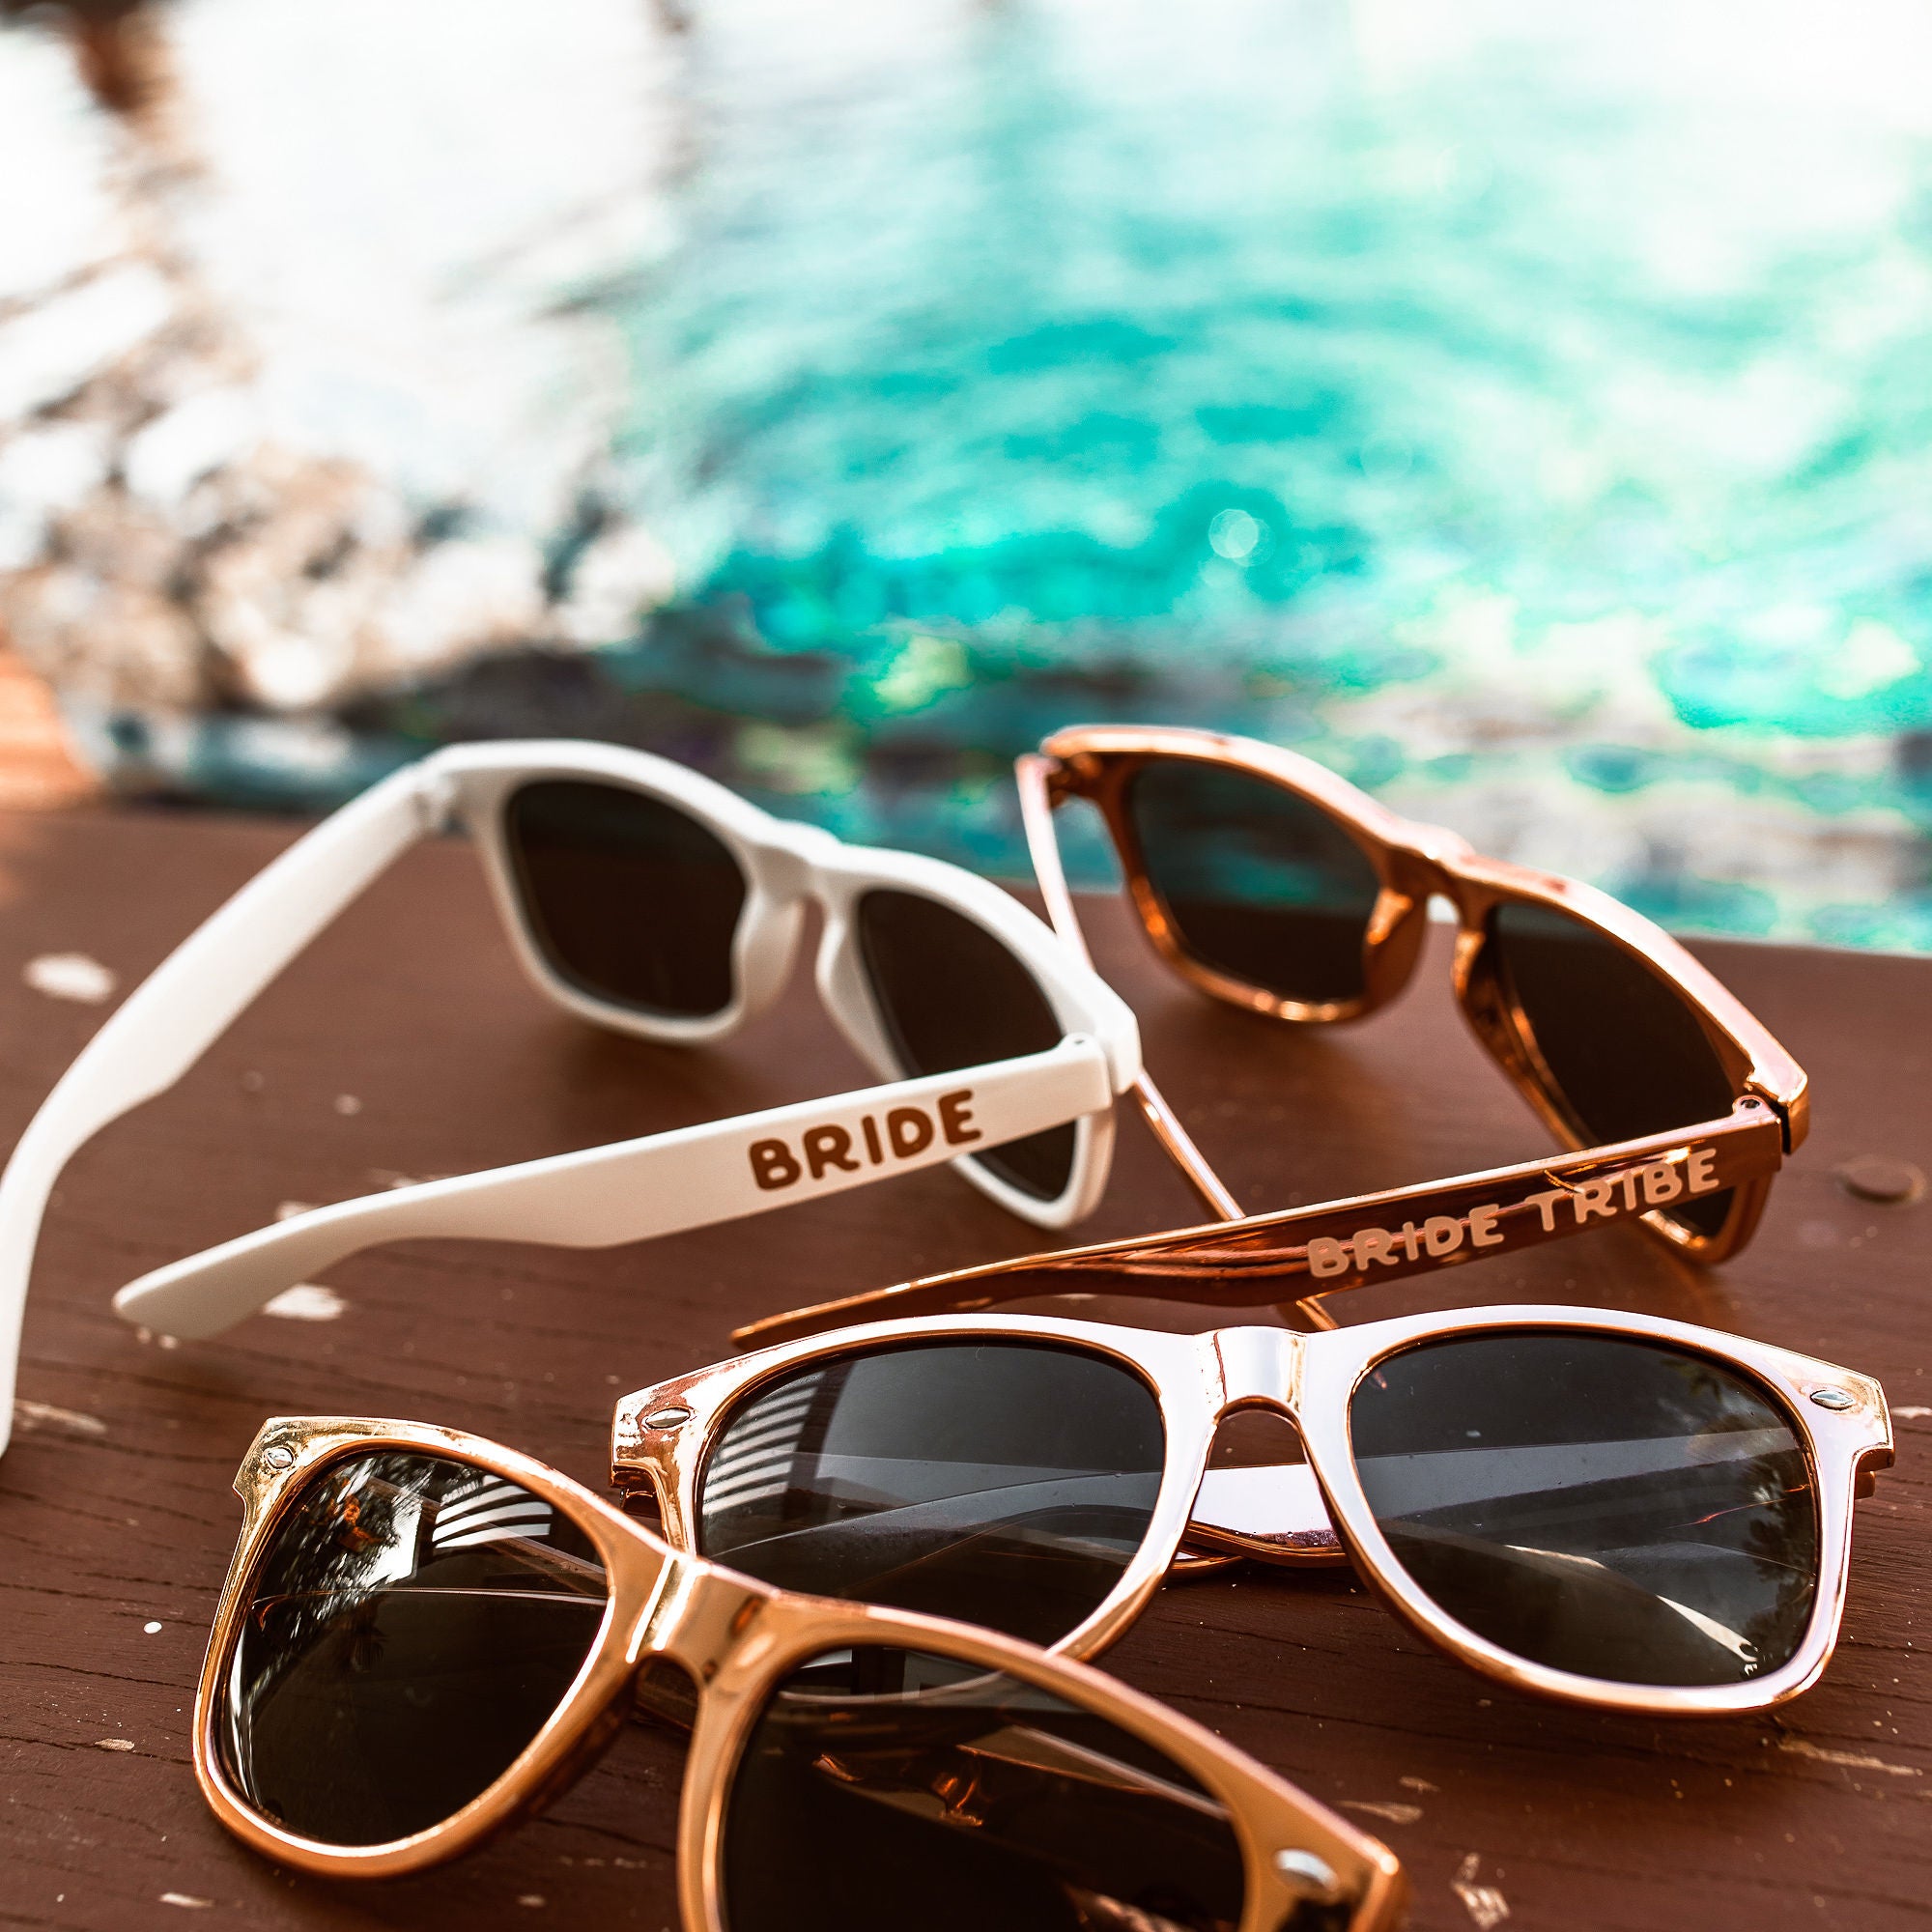 Personalized sunglasses